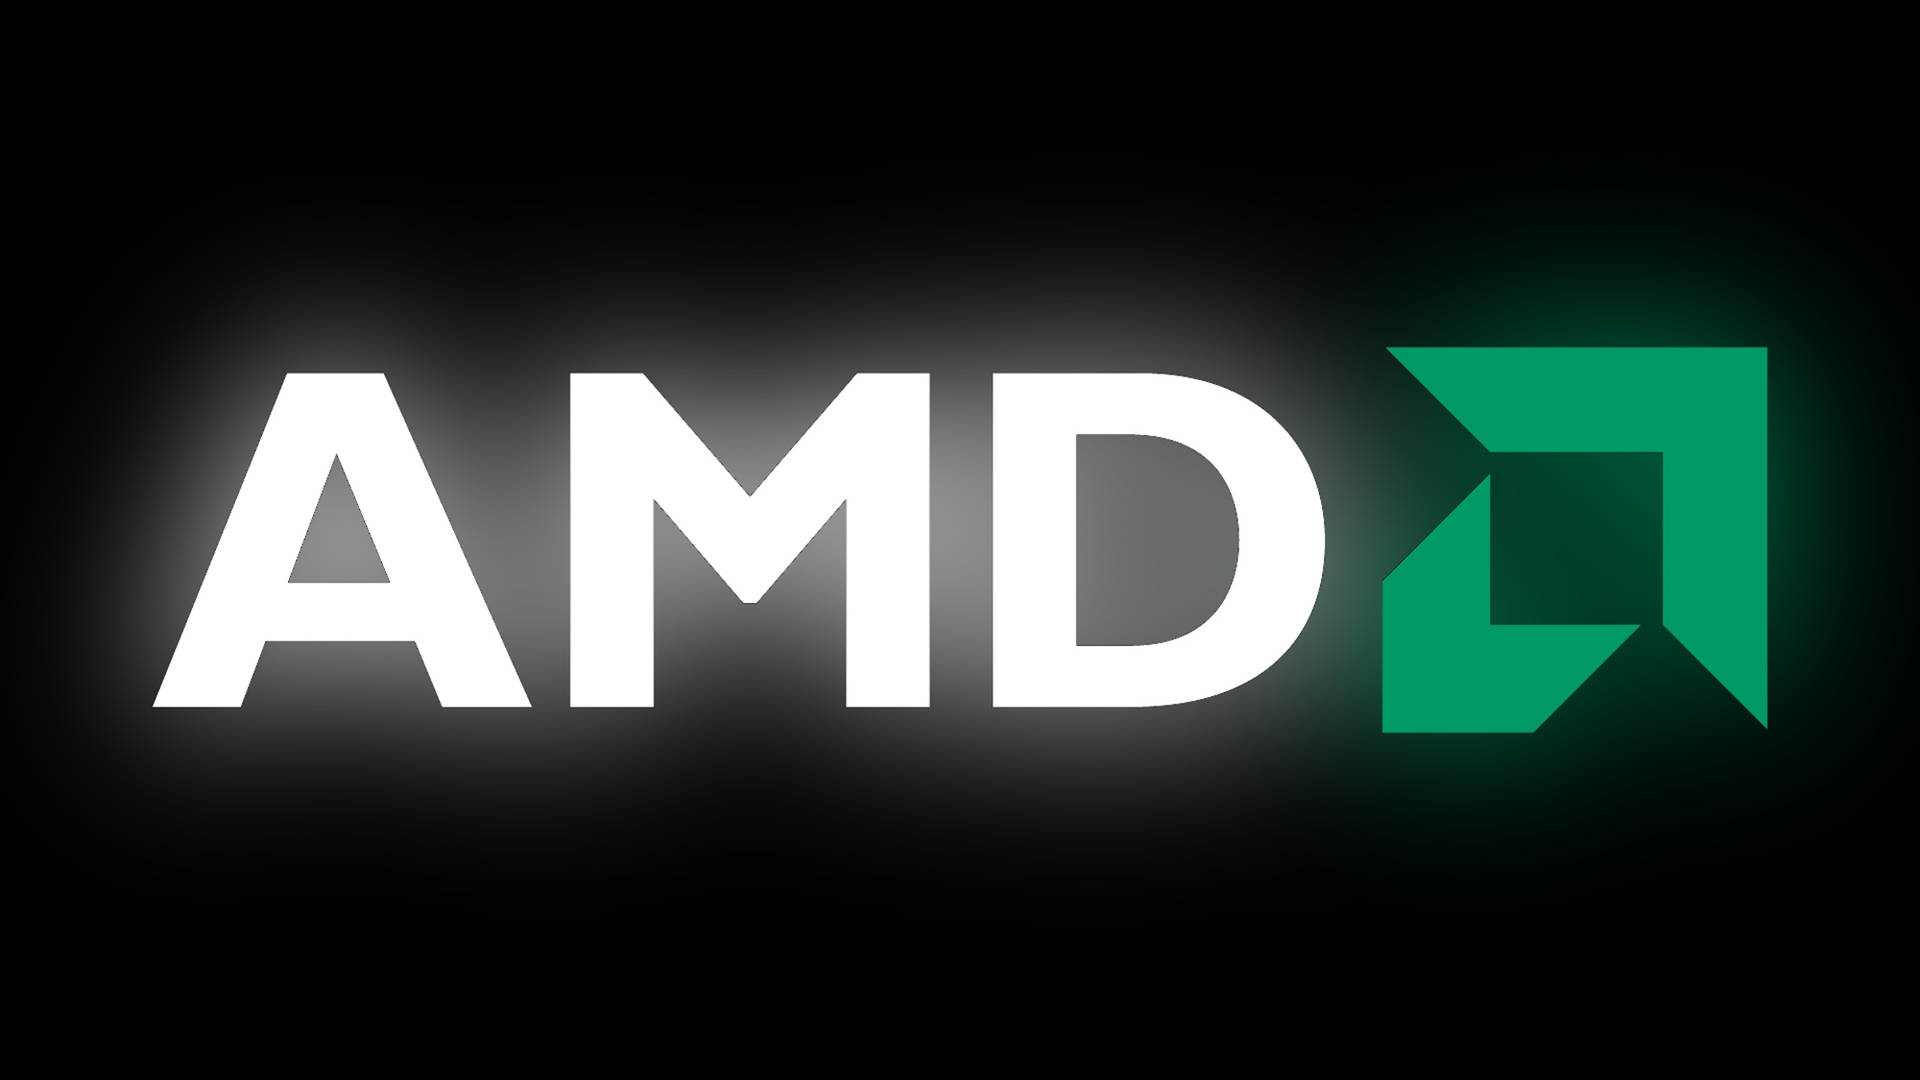 Glowing Amd Logo